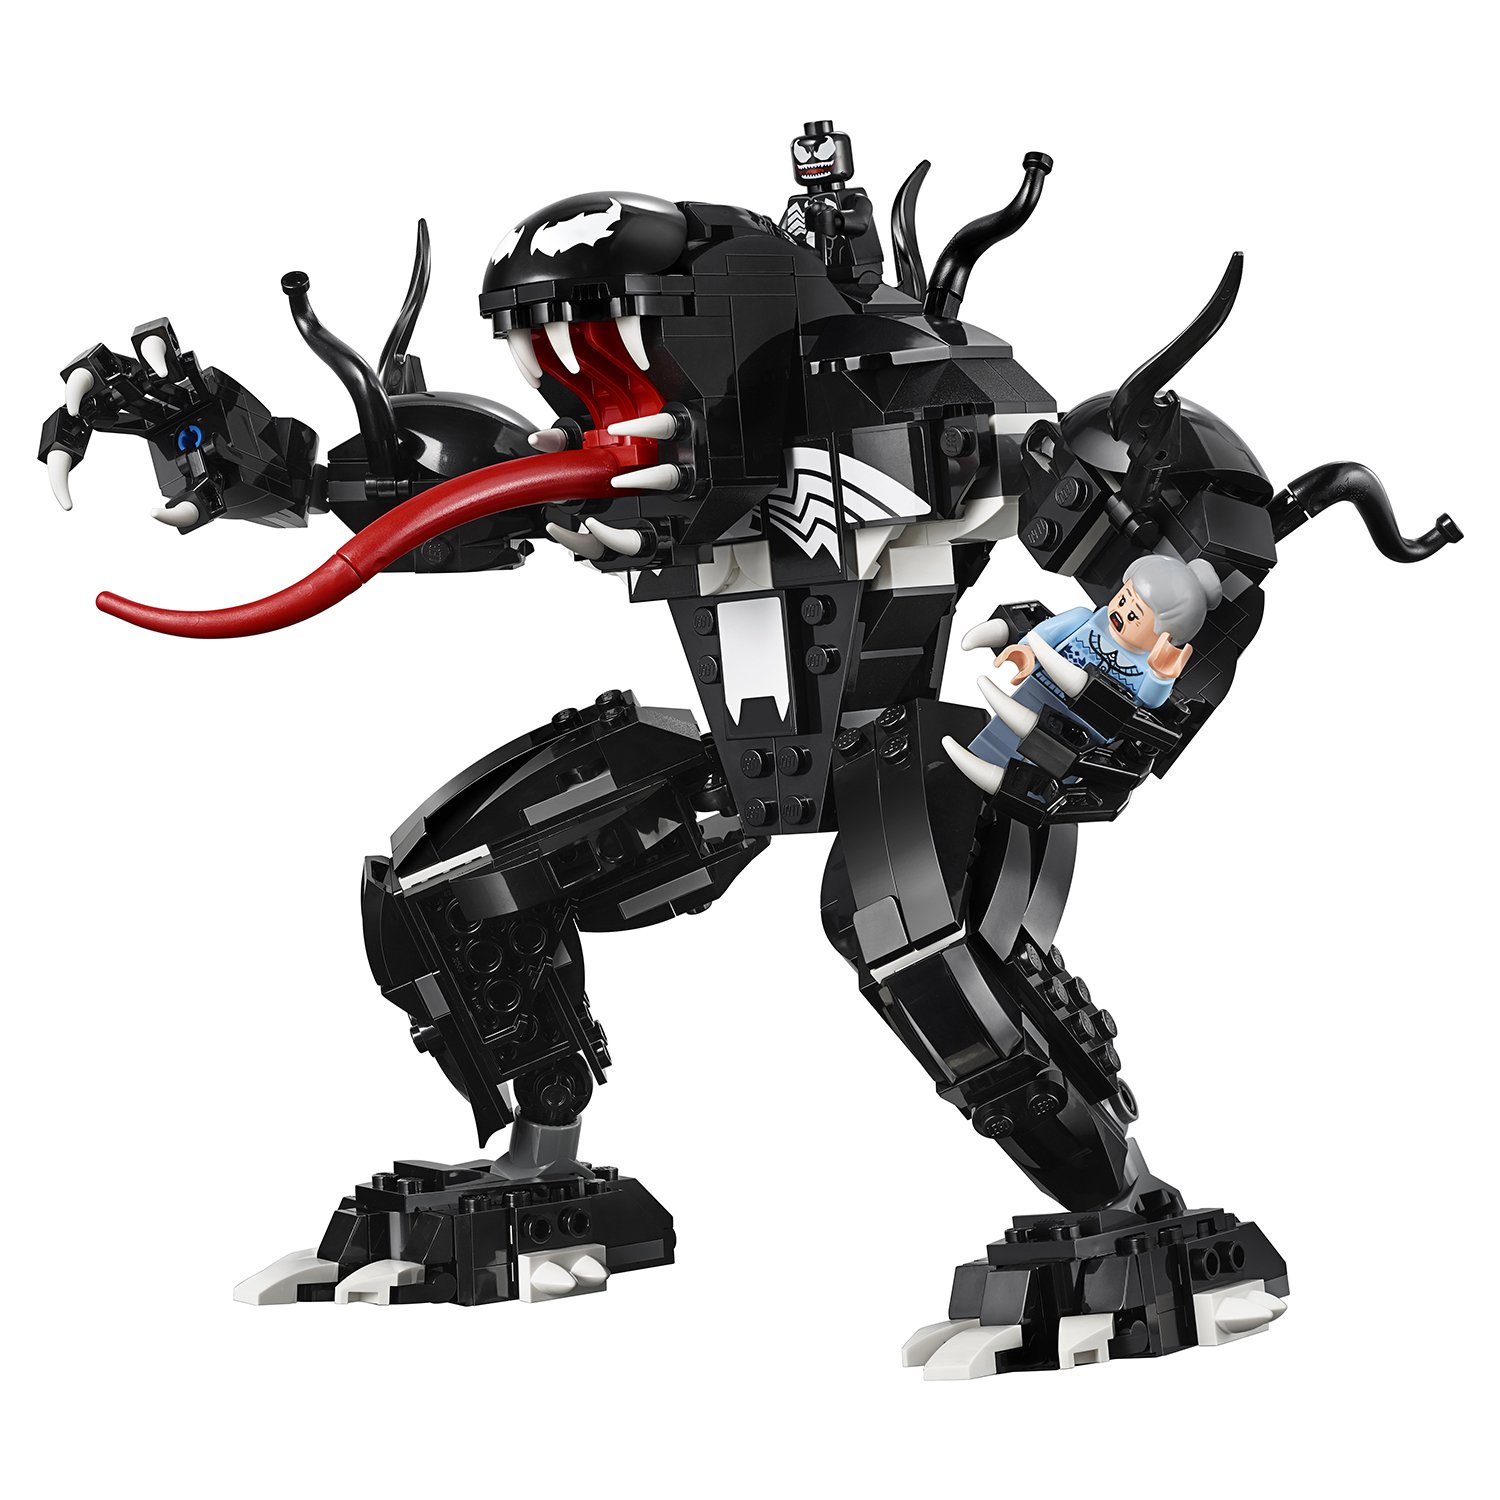 Конструктор LEGO Marvel Super Heroes 76115 Человек-паук против Венома